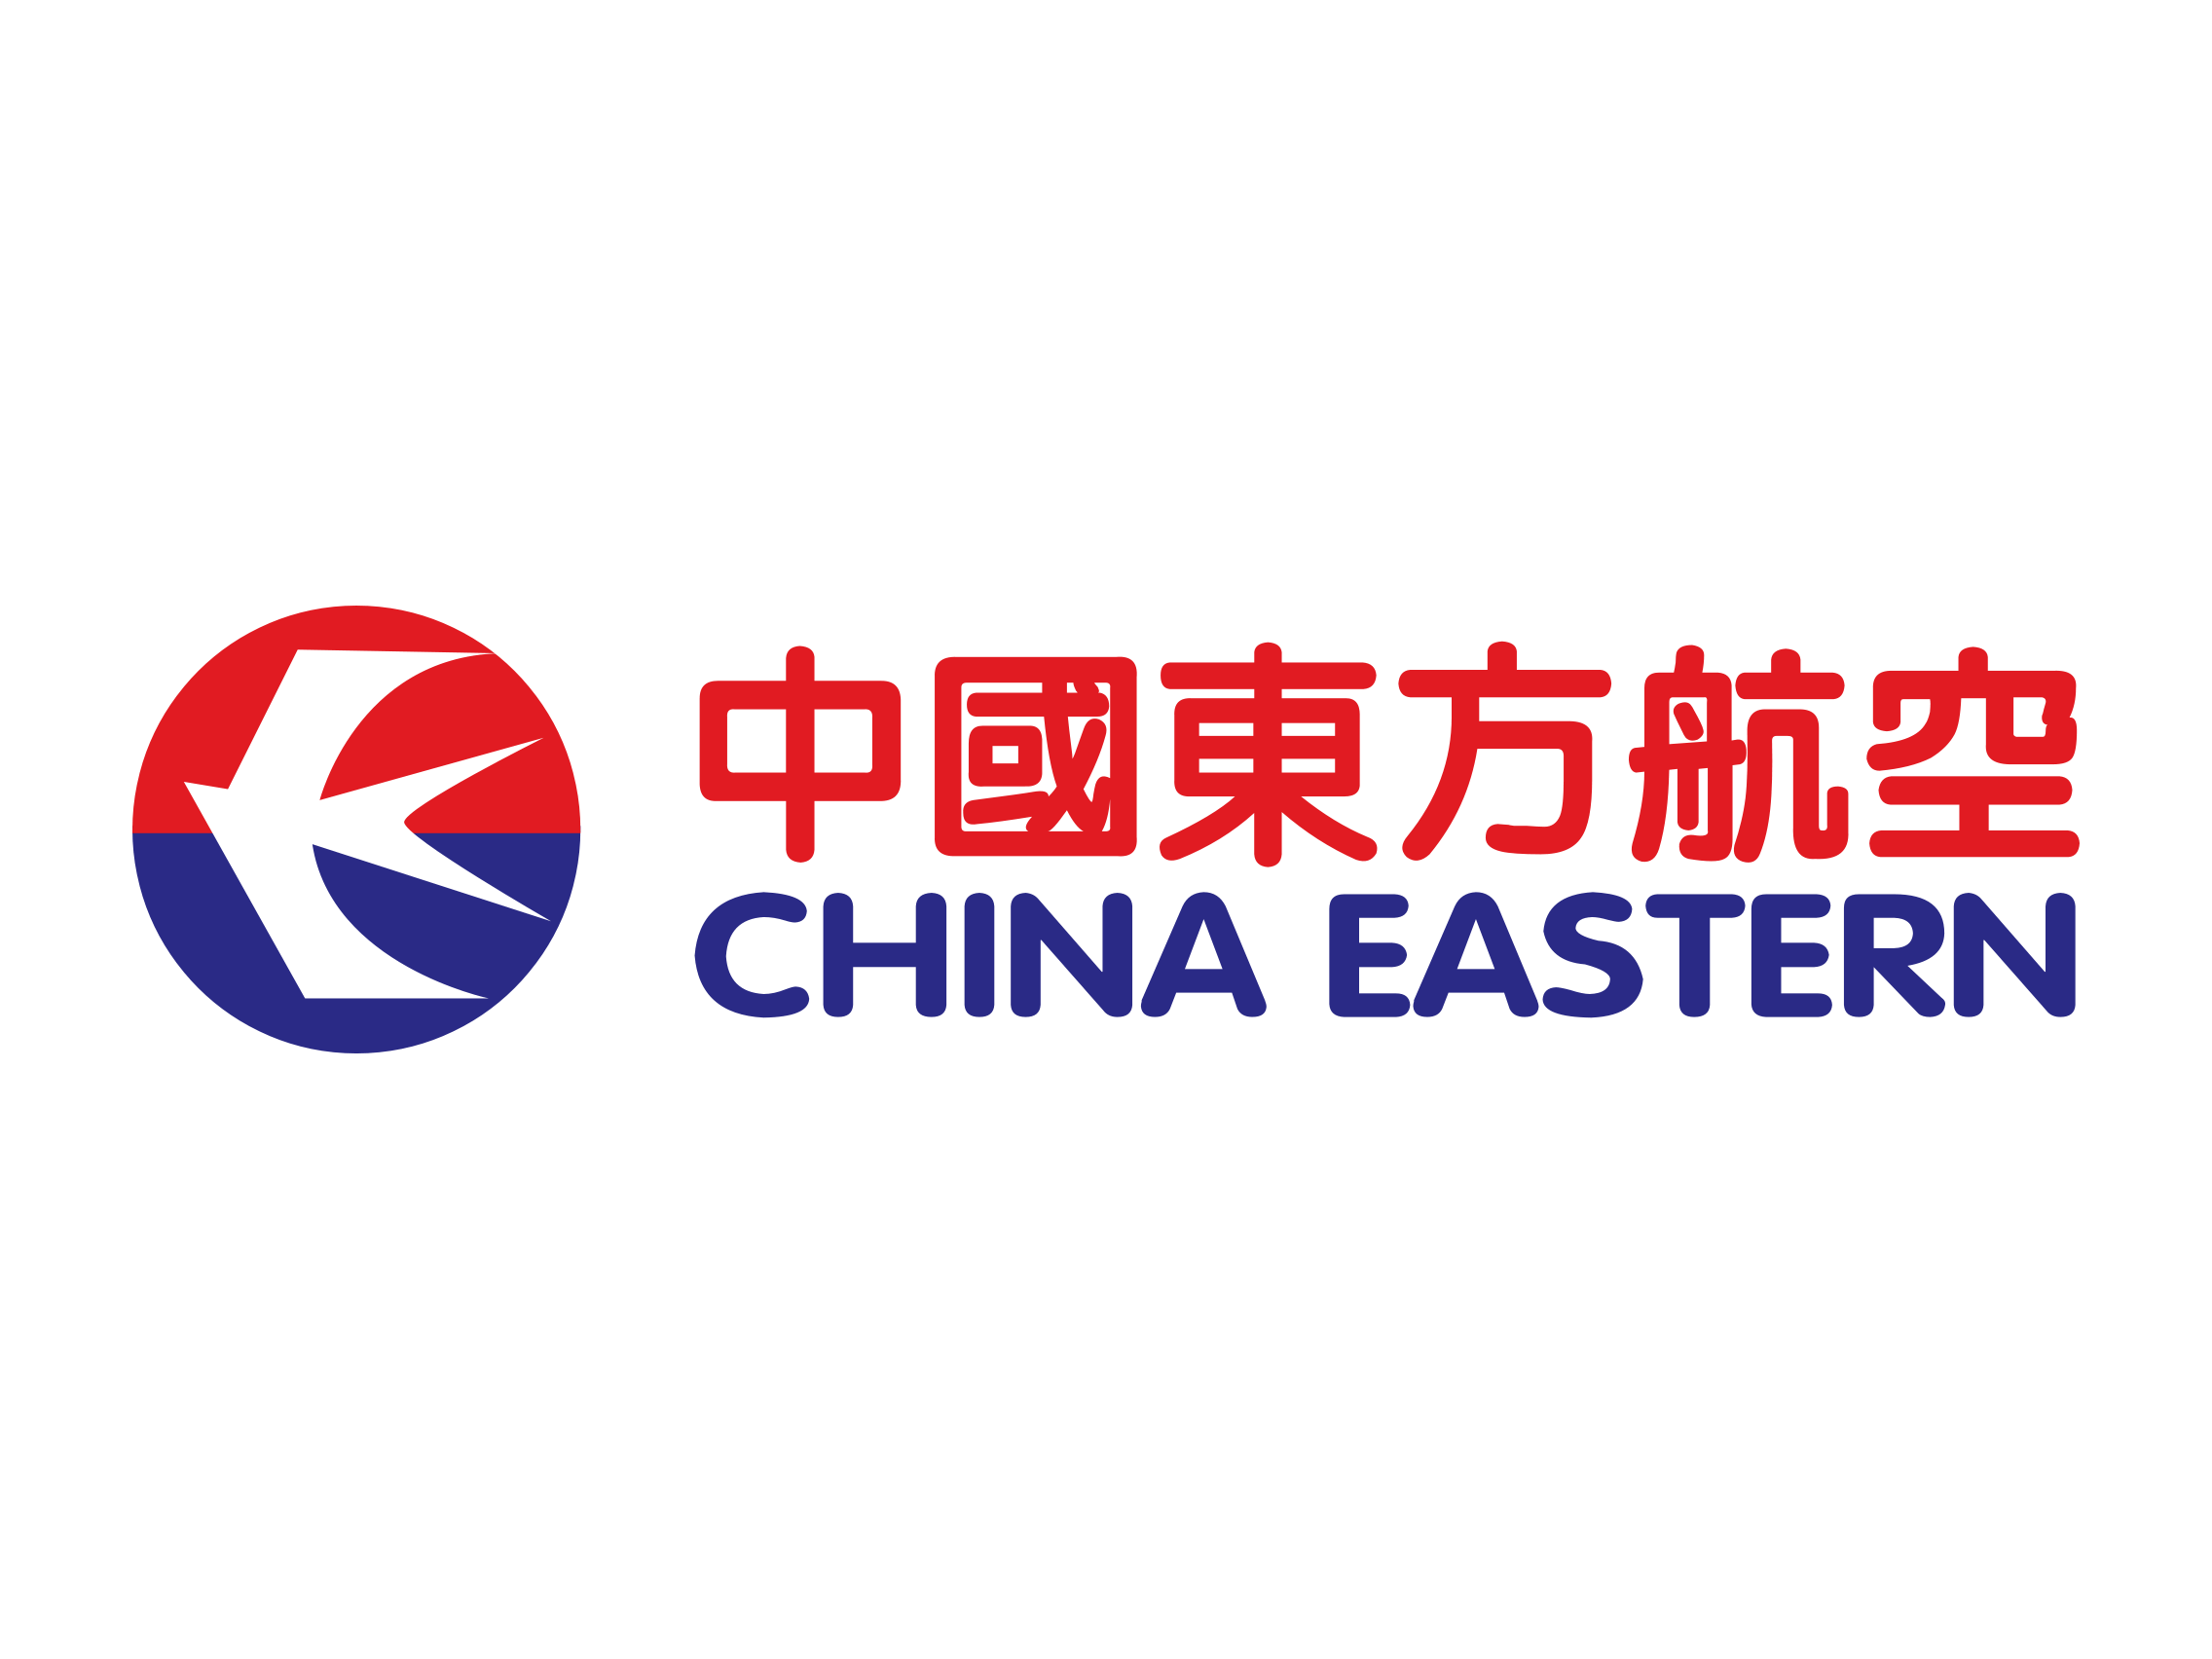 Eastern Logo - China Eastern logo | Logok